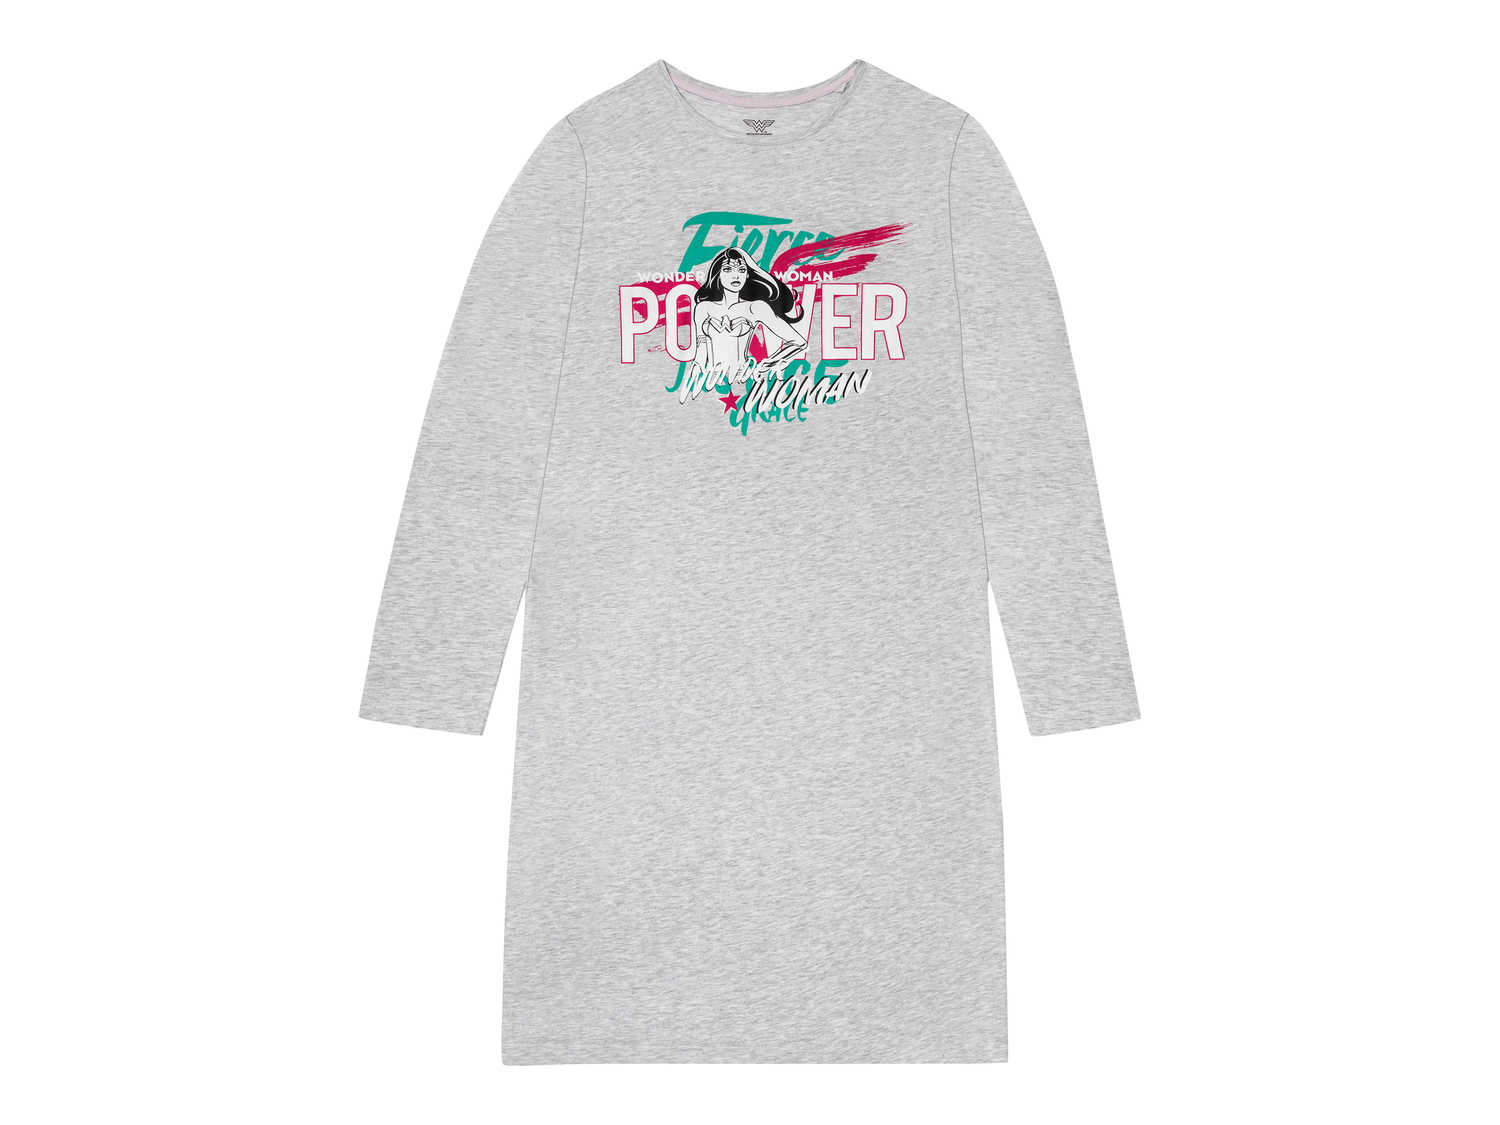 Maxi t-shirt per donna Wonder Woman, Barbie, Hello Kitty Prezzo-lidl, prezzo 7.99 ...